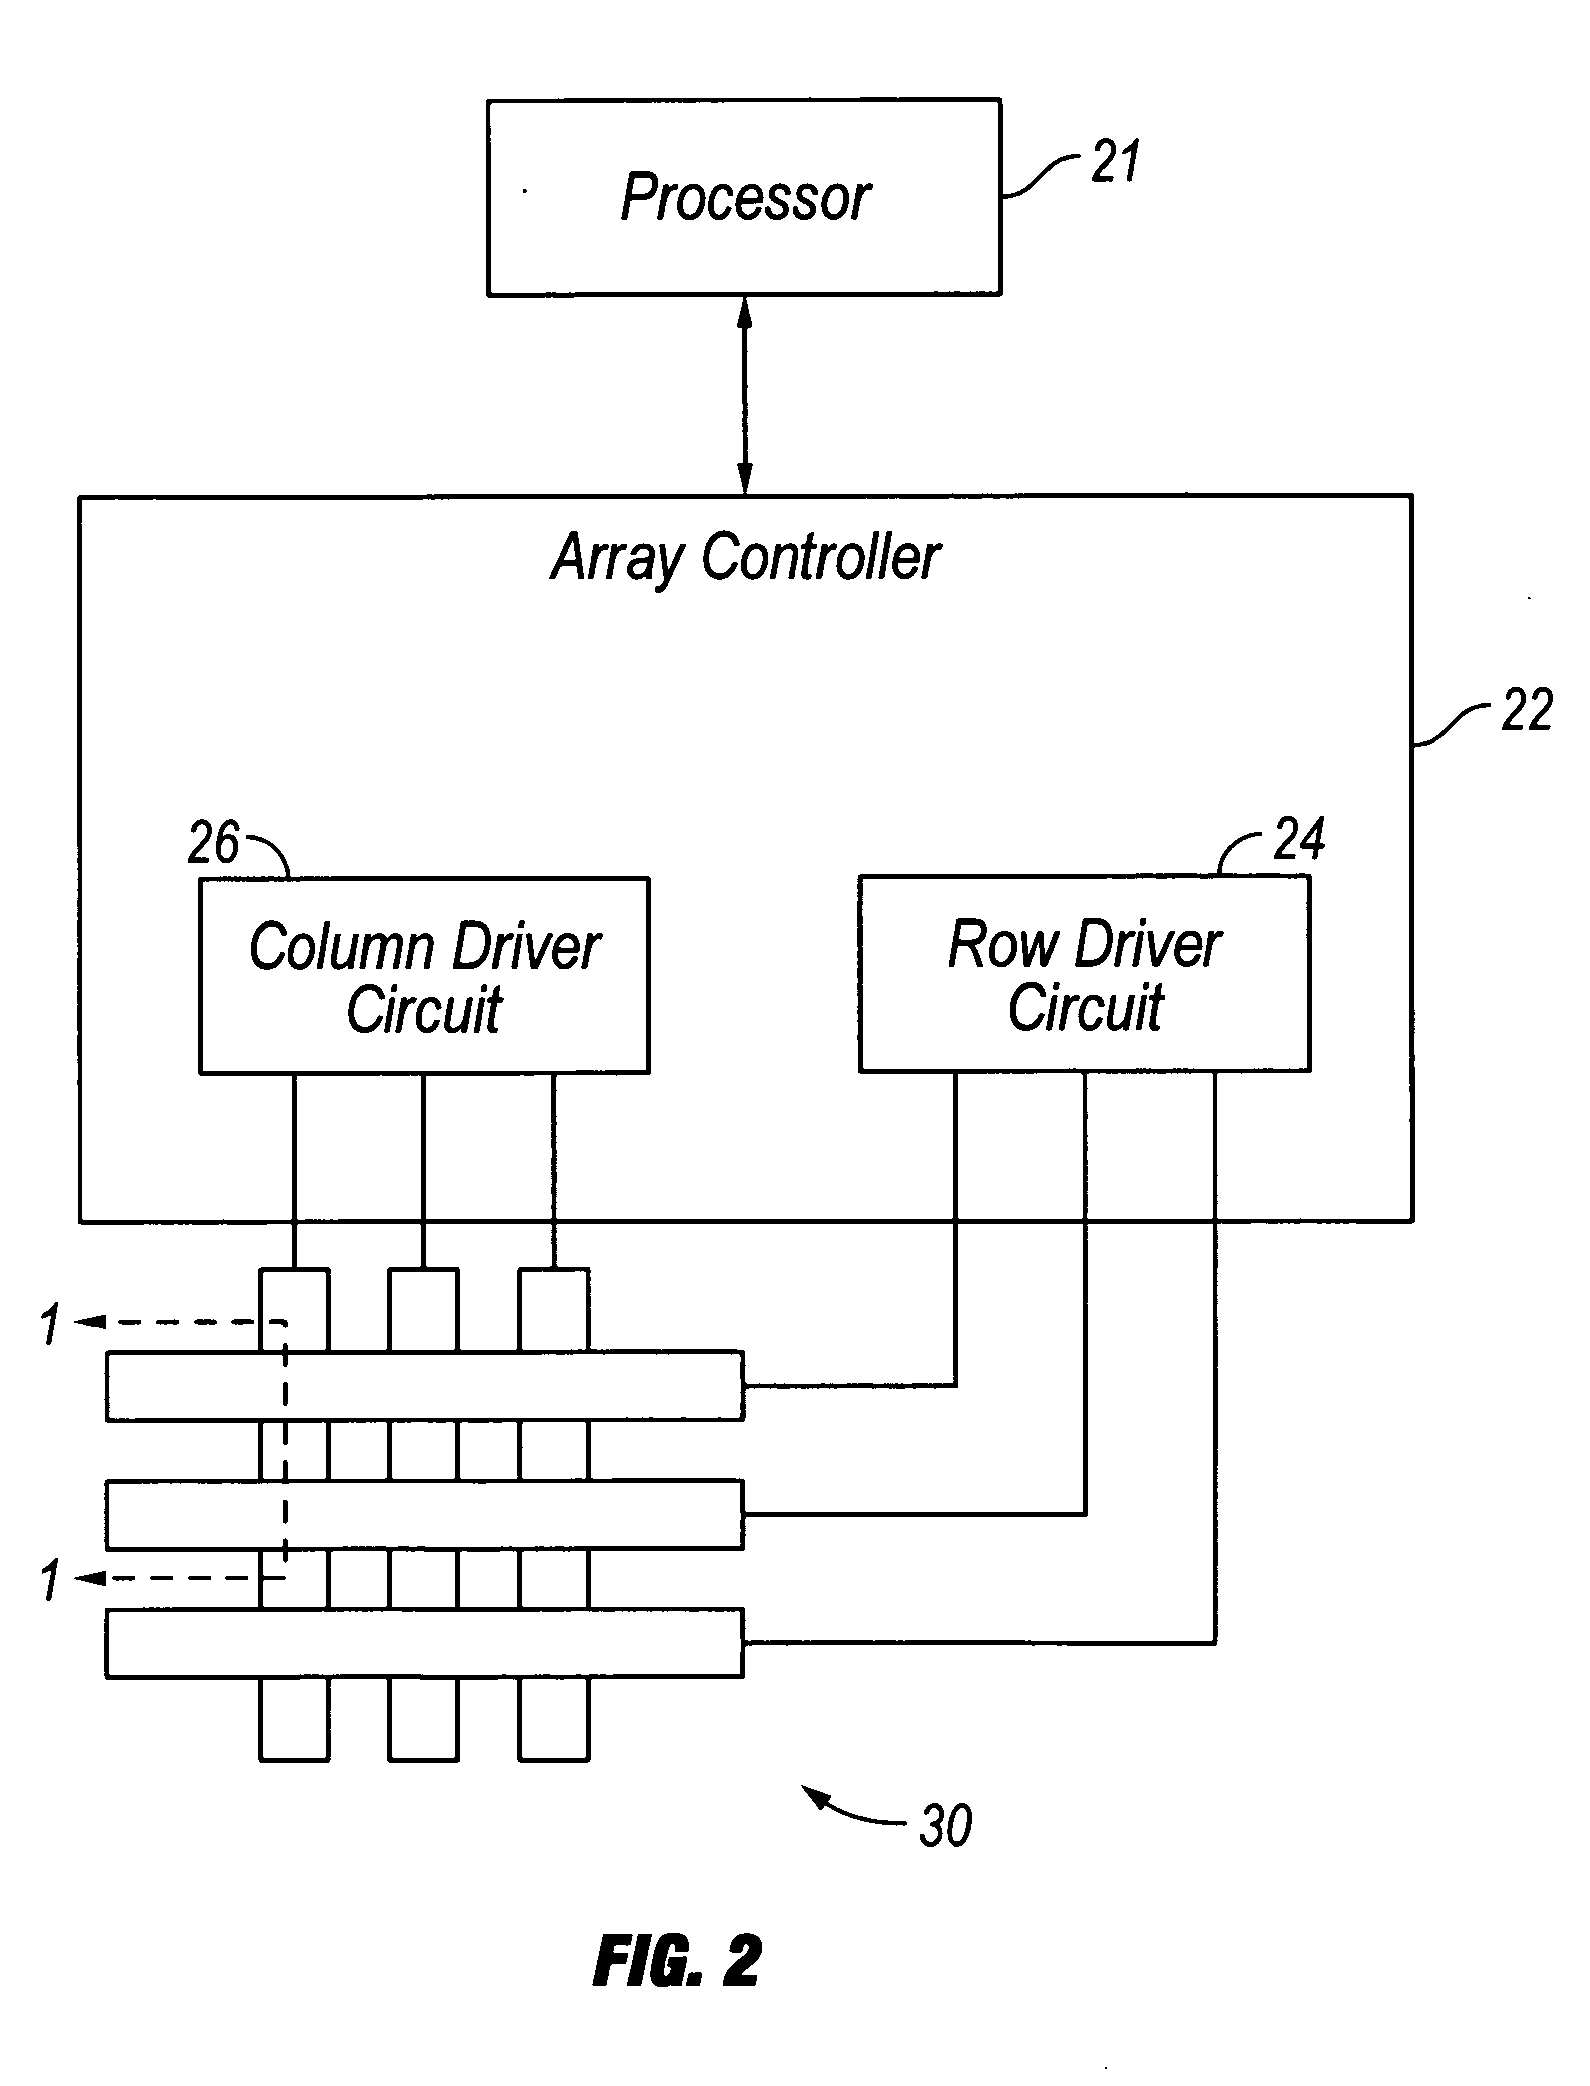 Process control monitors for interferometric modulators